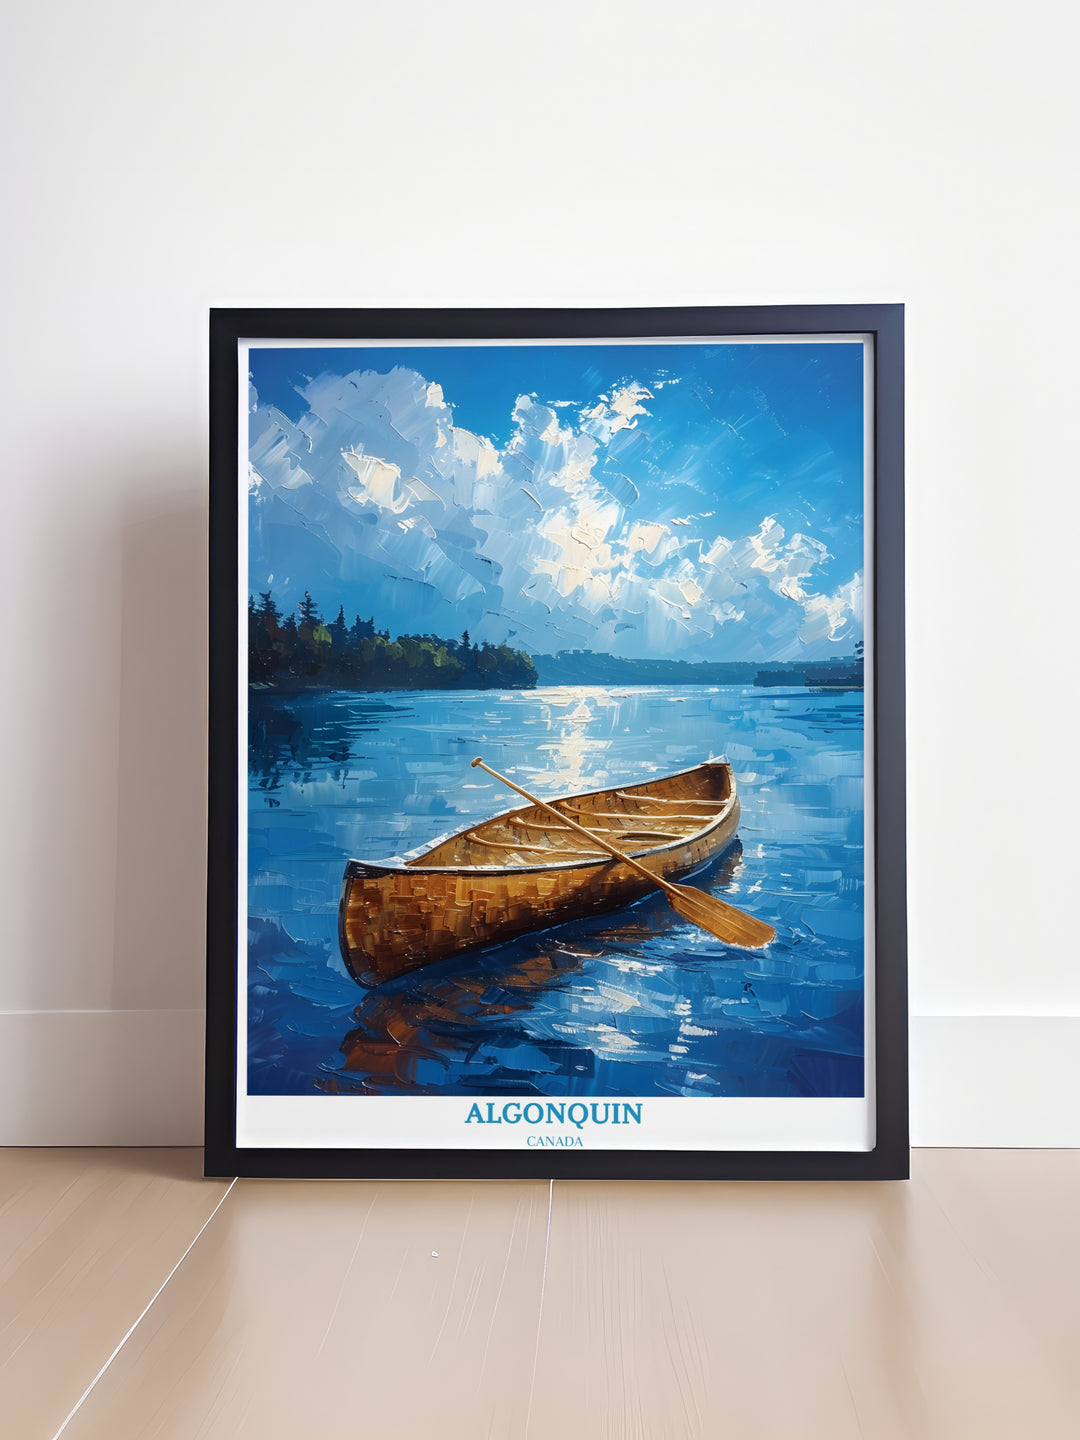 Algonquin Park Poster - Canoe Lake - Algonquin Provincial Park - Ontario Art - Ontario Travel Decor - Canada Art